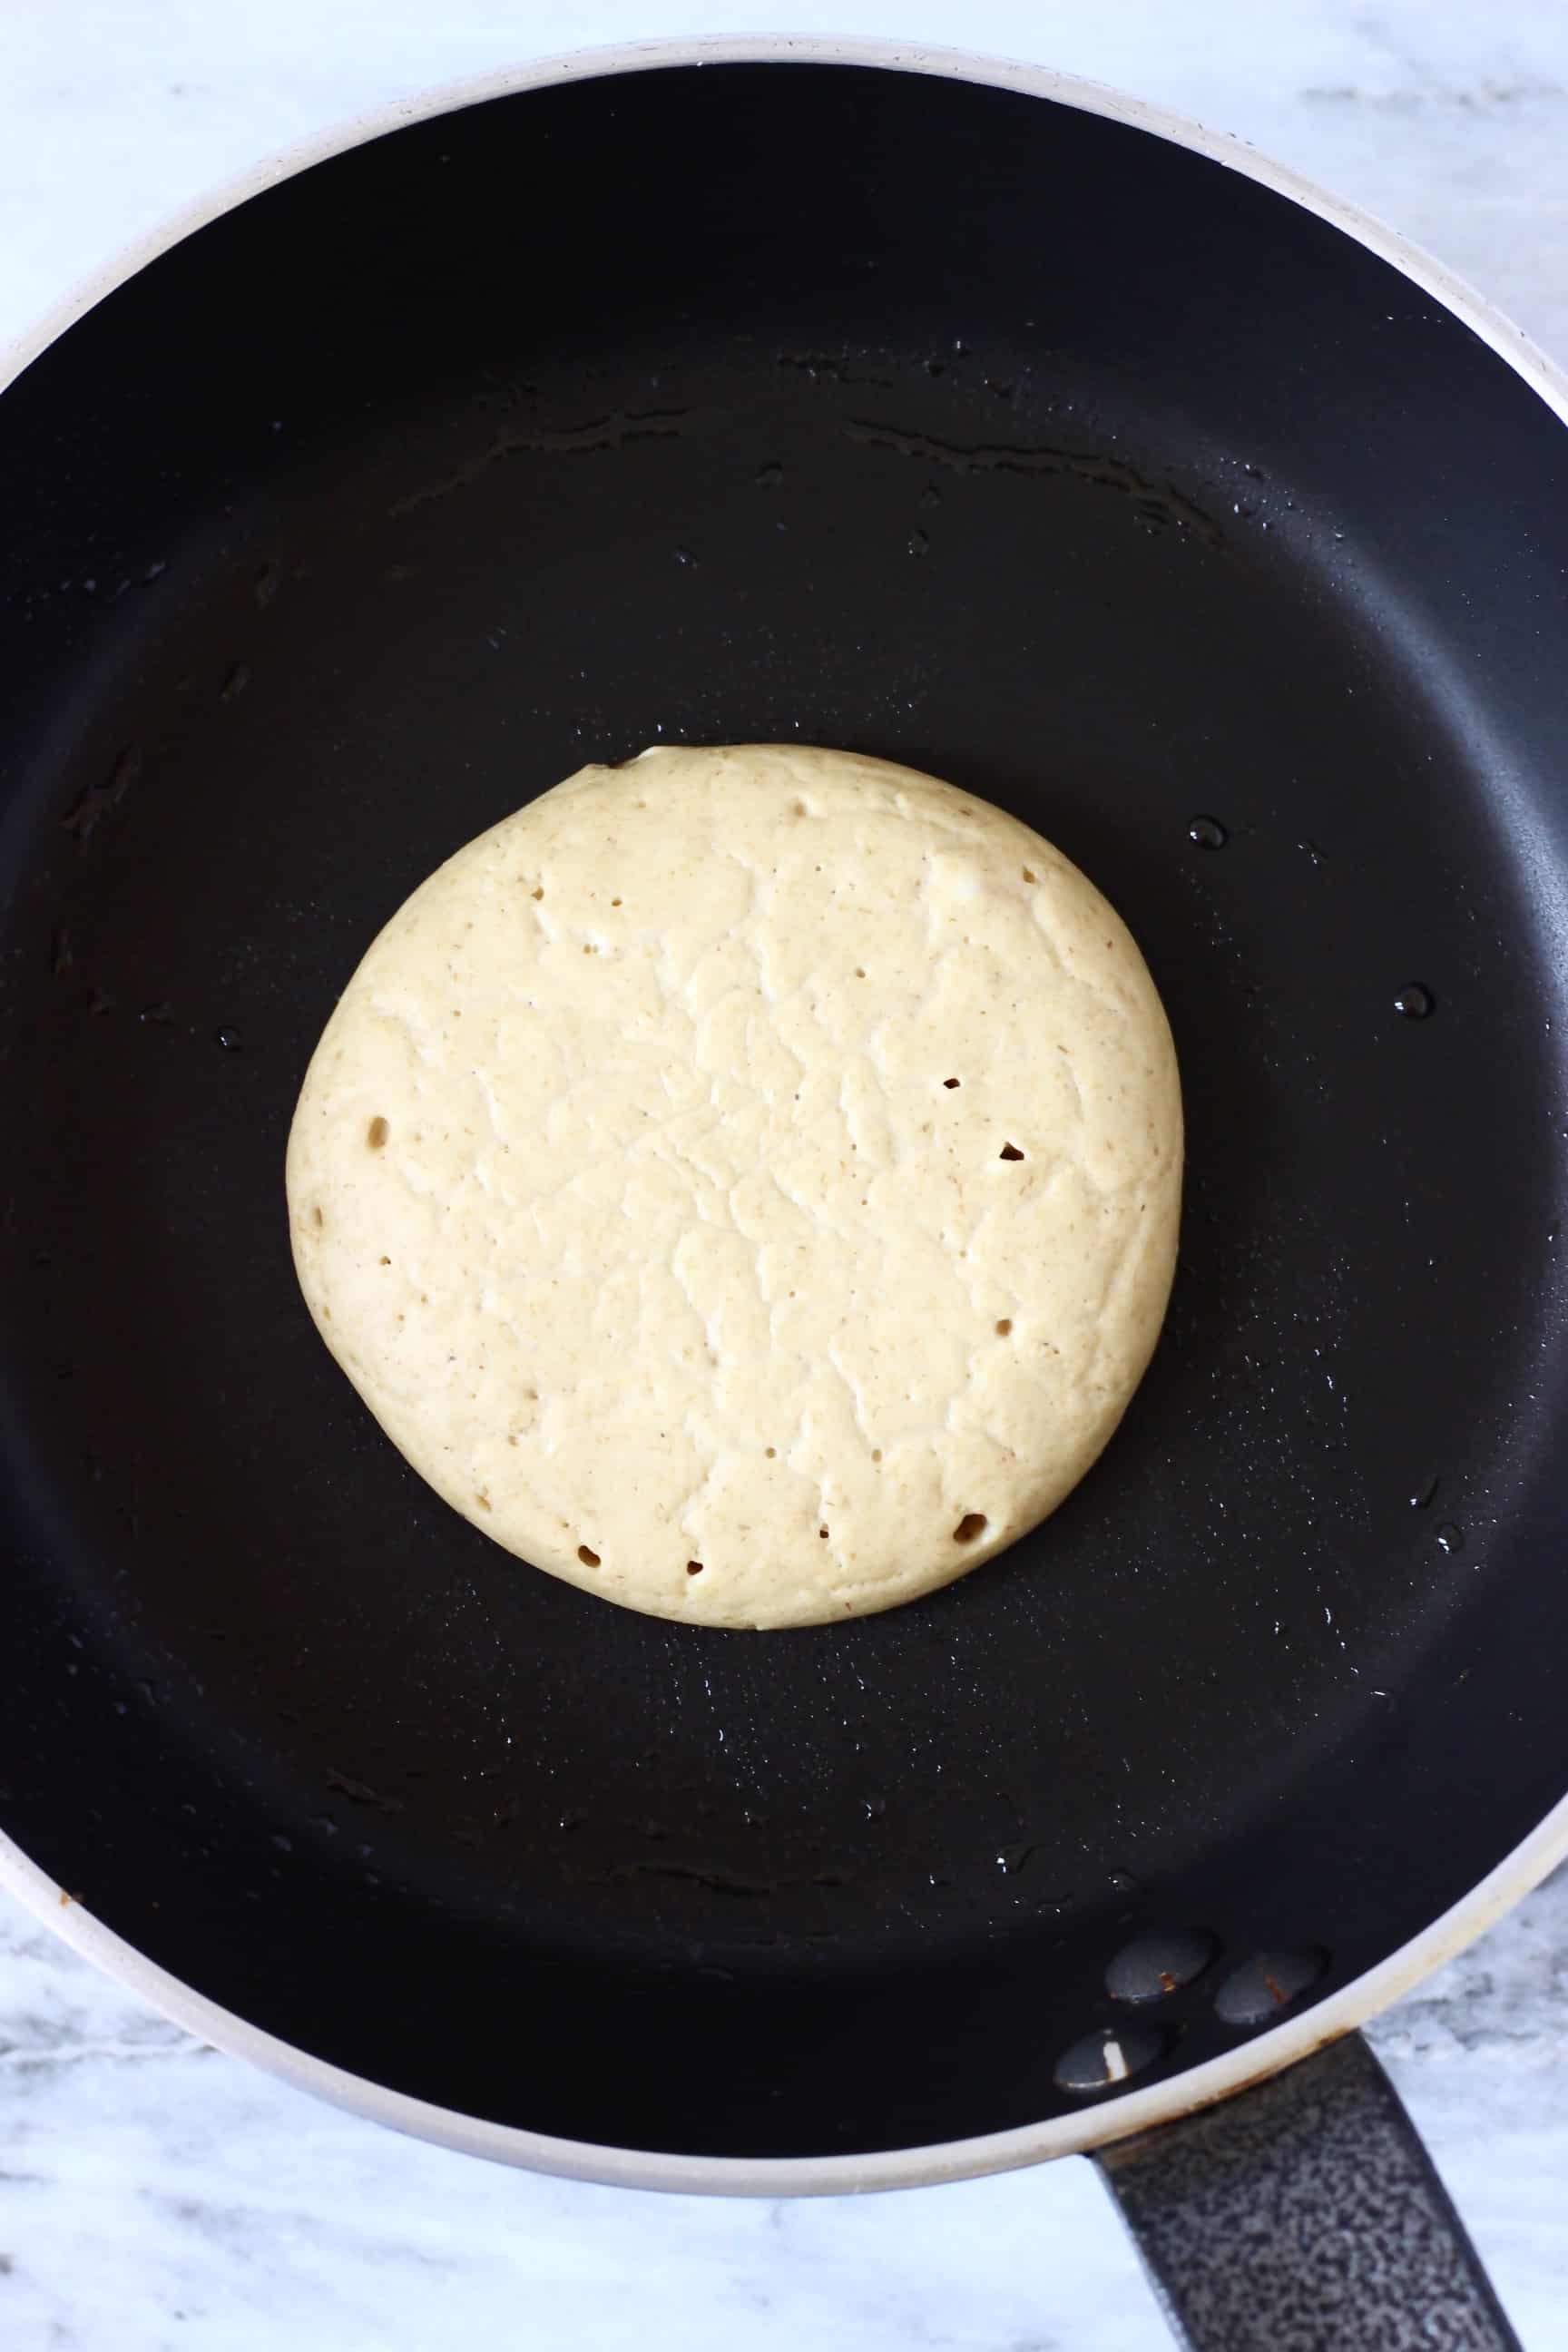 An uncooked gluten-free vegan protein pancake in a frying pan